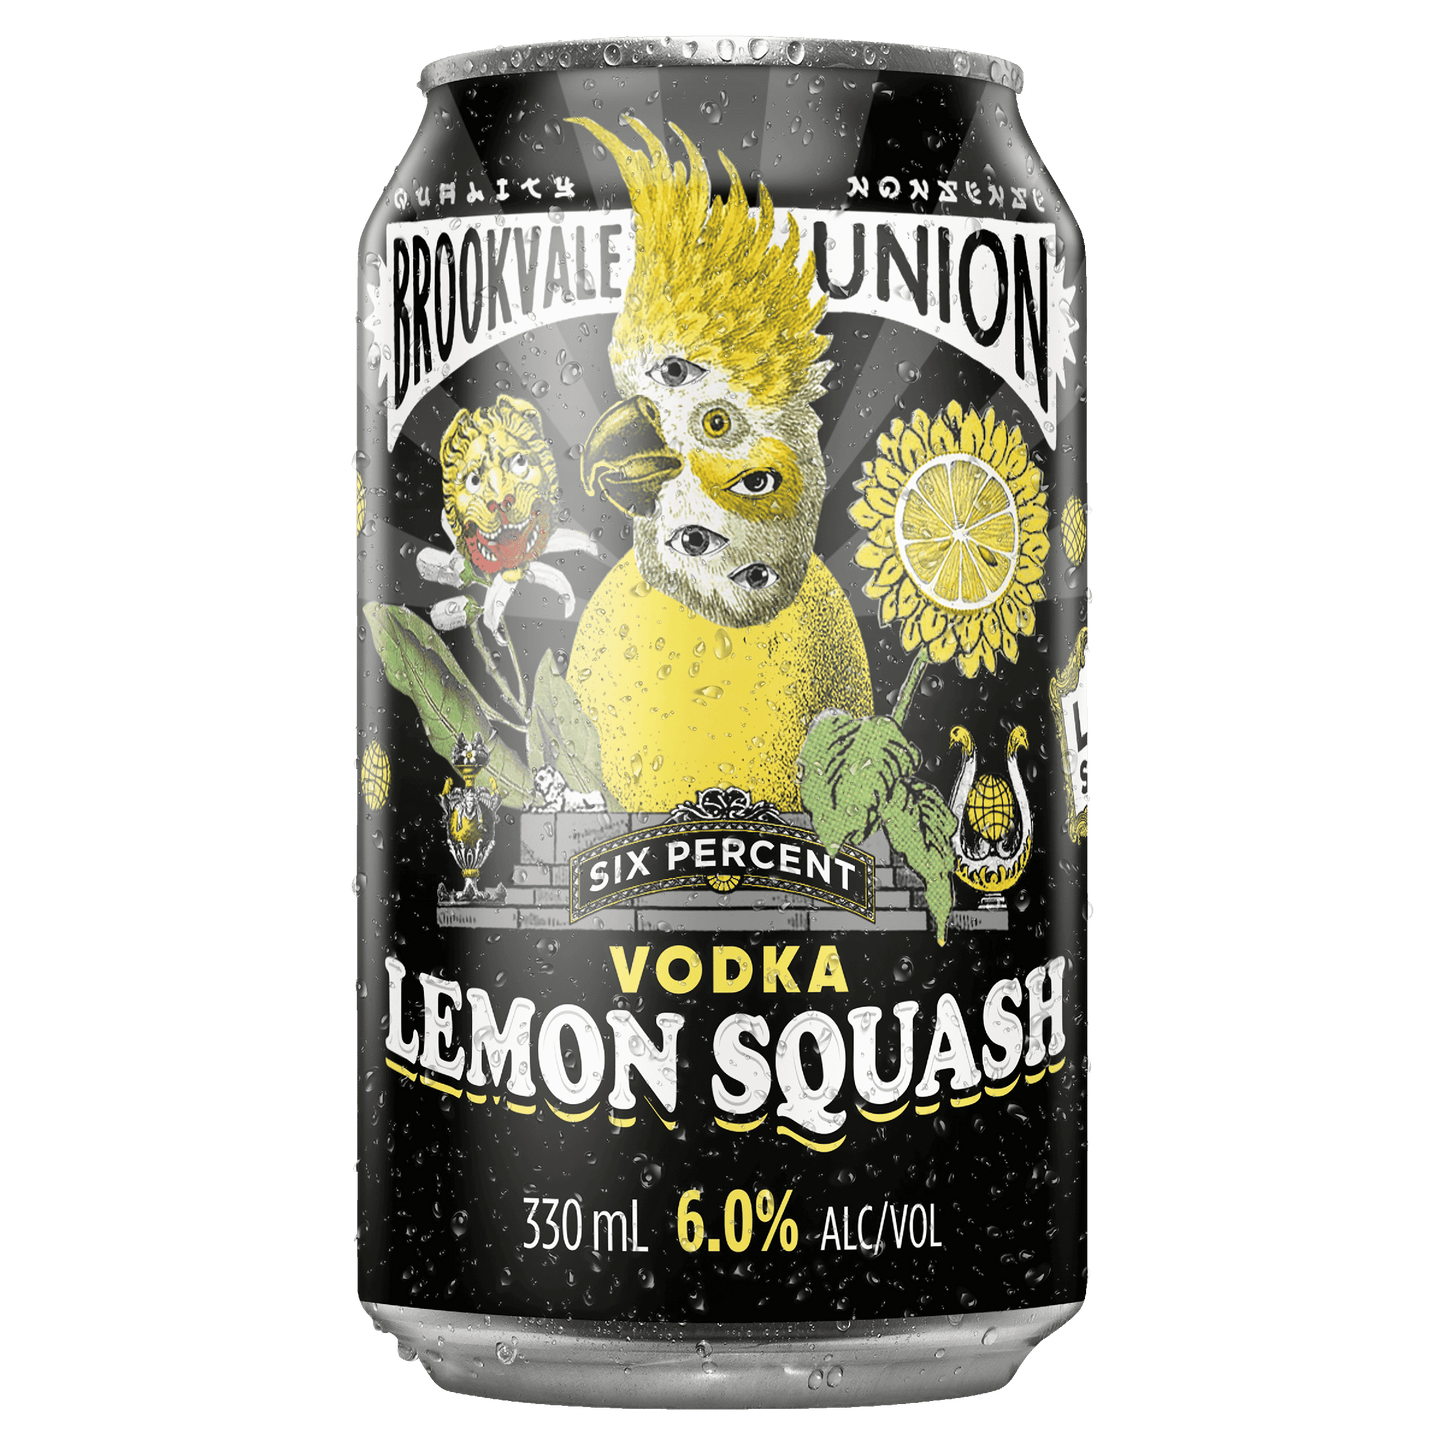 Brookvale Union Lemon Squash